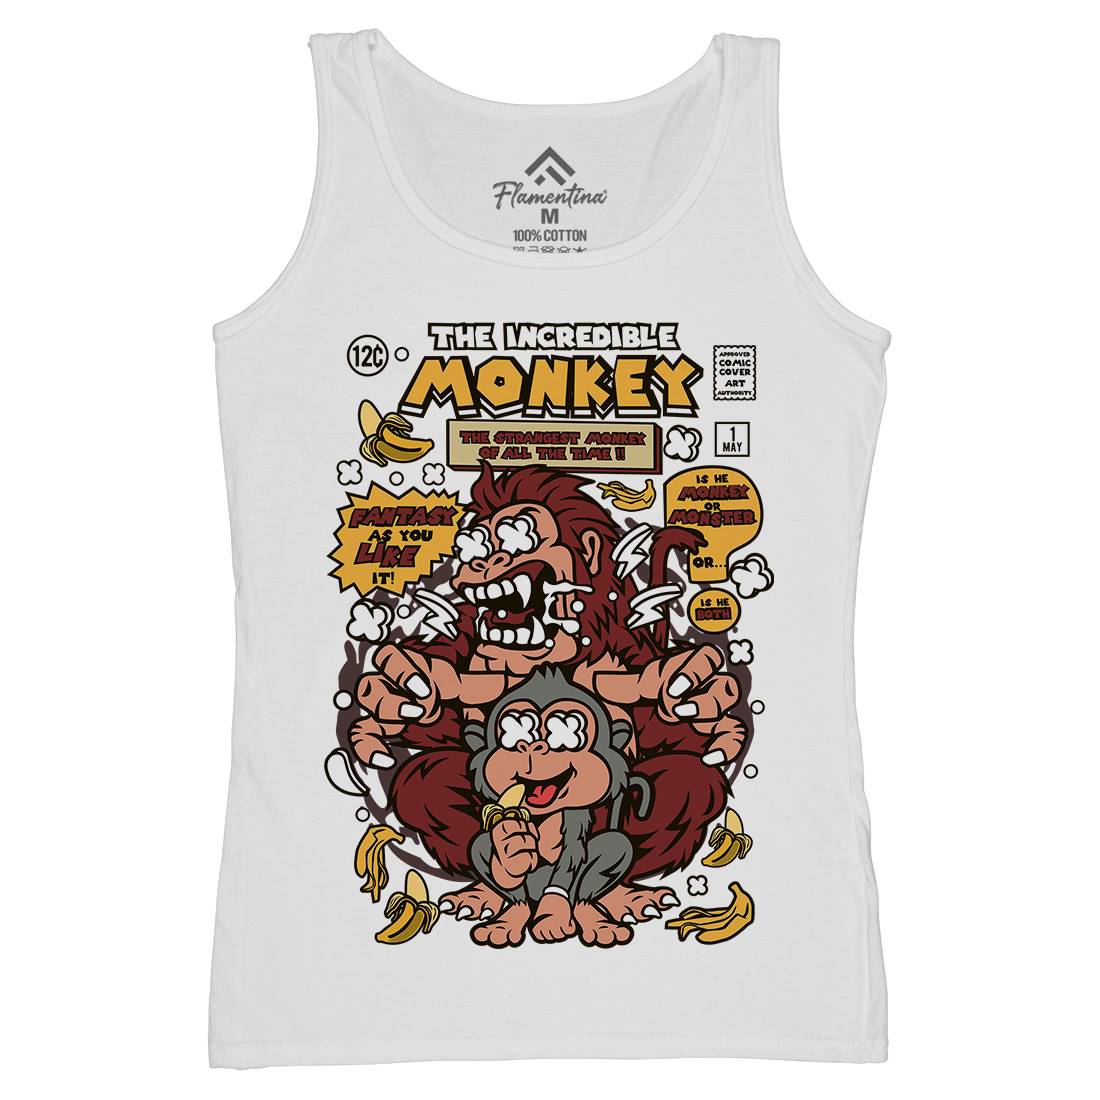 Incredible Monkey Womens Organic Tank Top Vest Animals C570